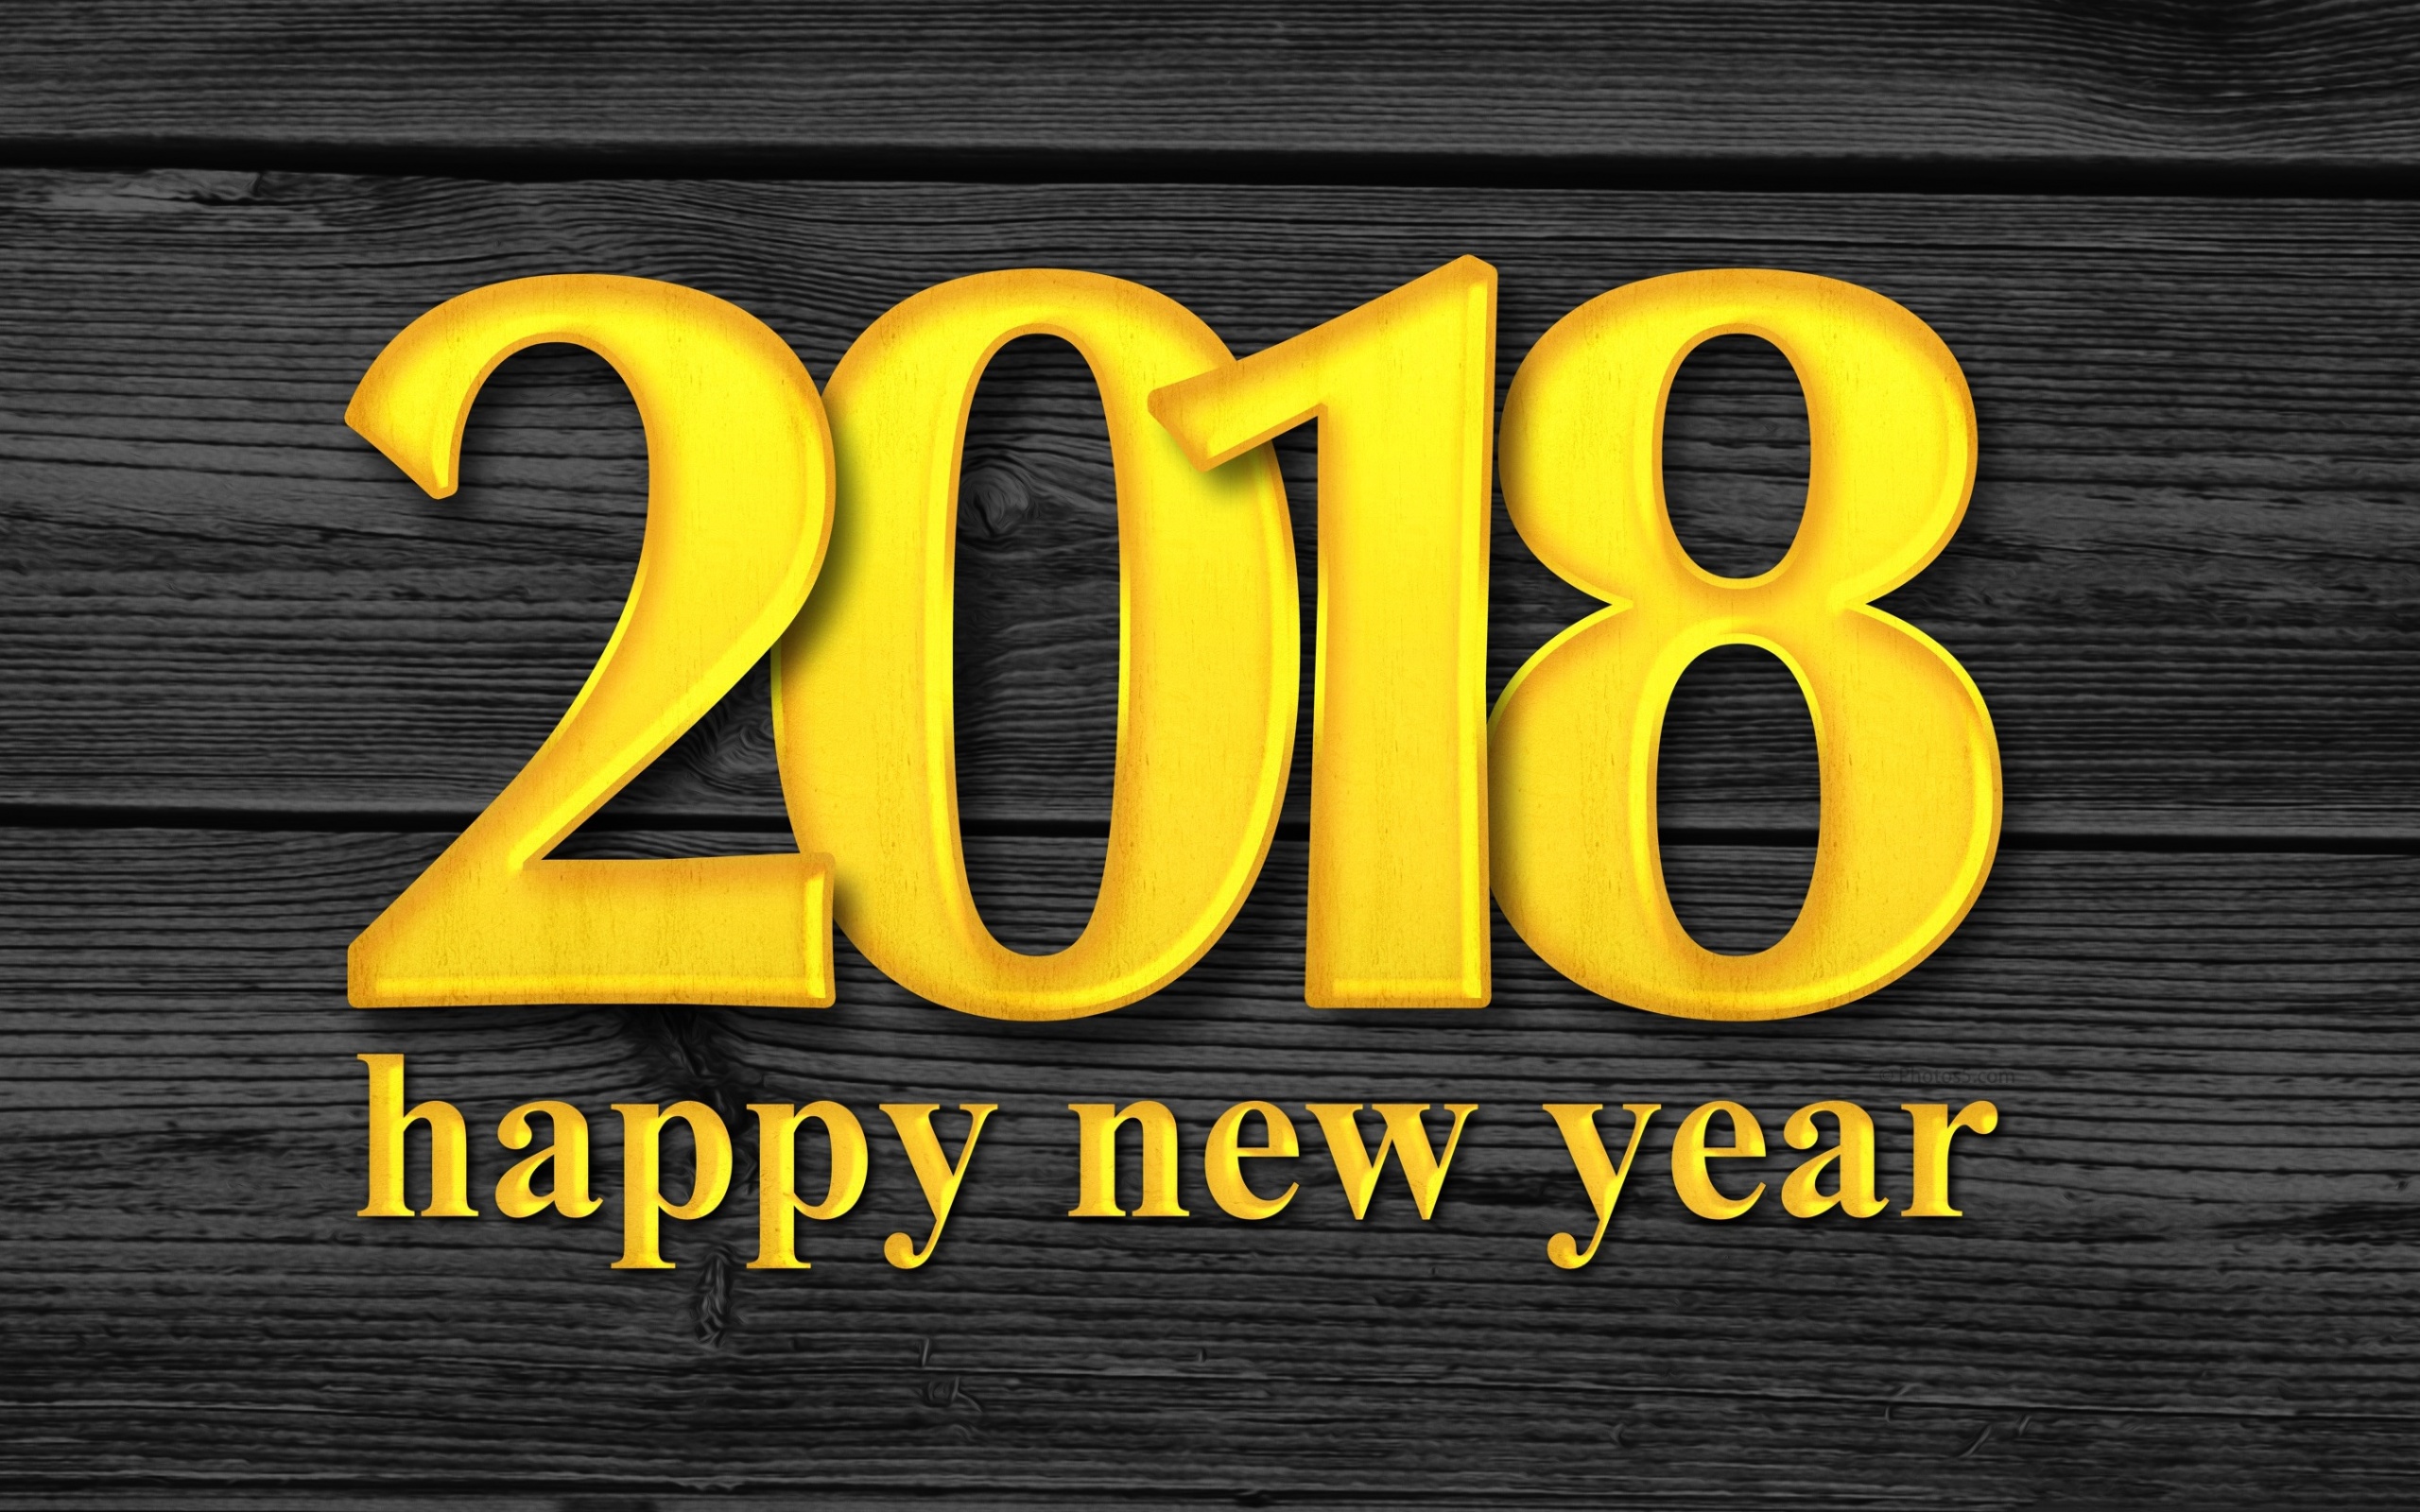 holiday, new year 2018, happy new year